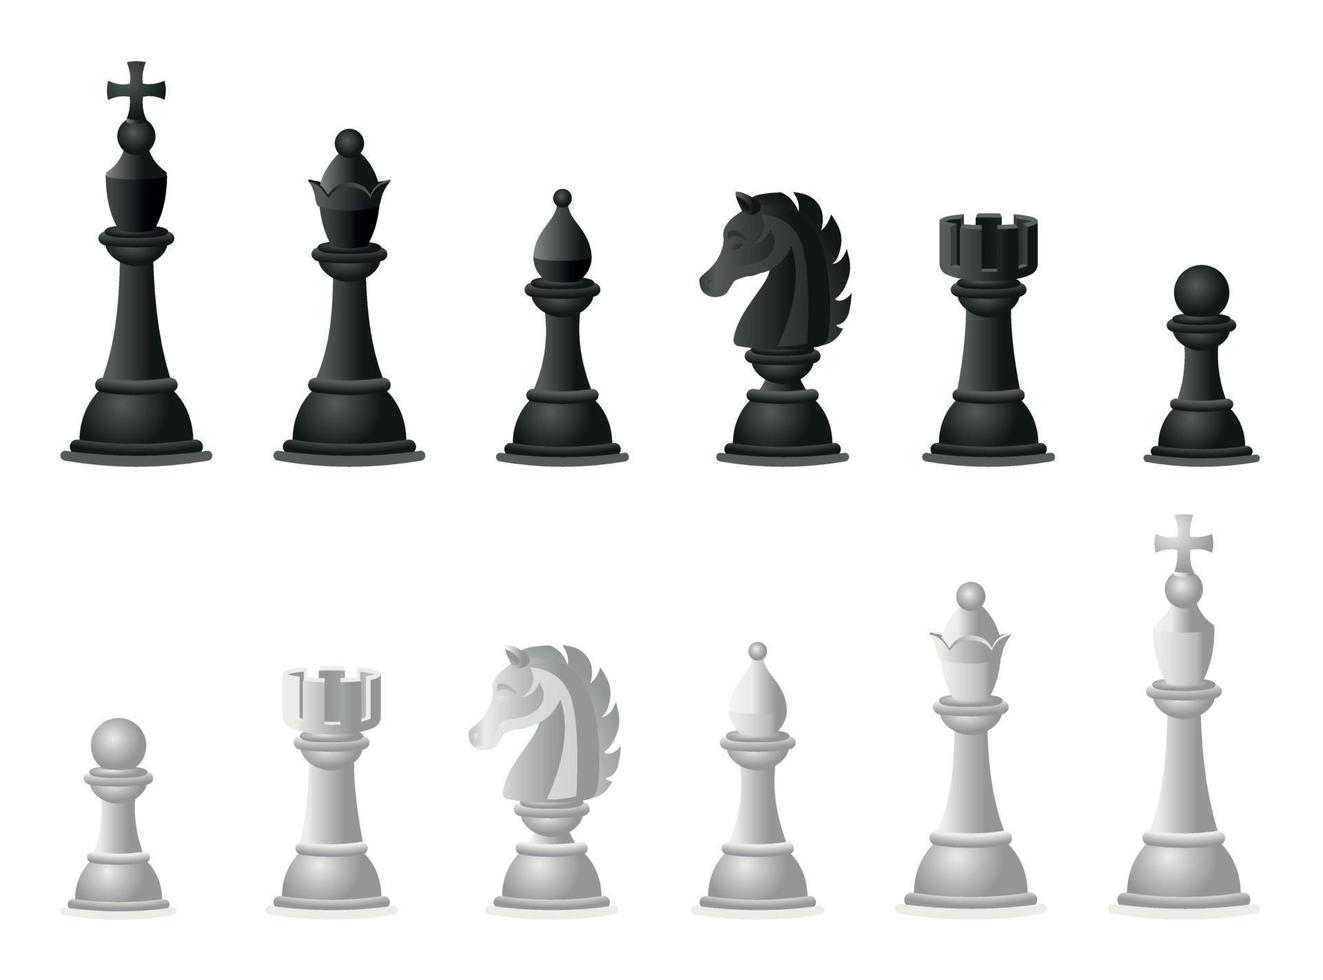 jeu d'icônes d'échecs, style cartoon vecteur